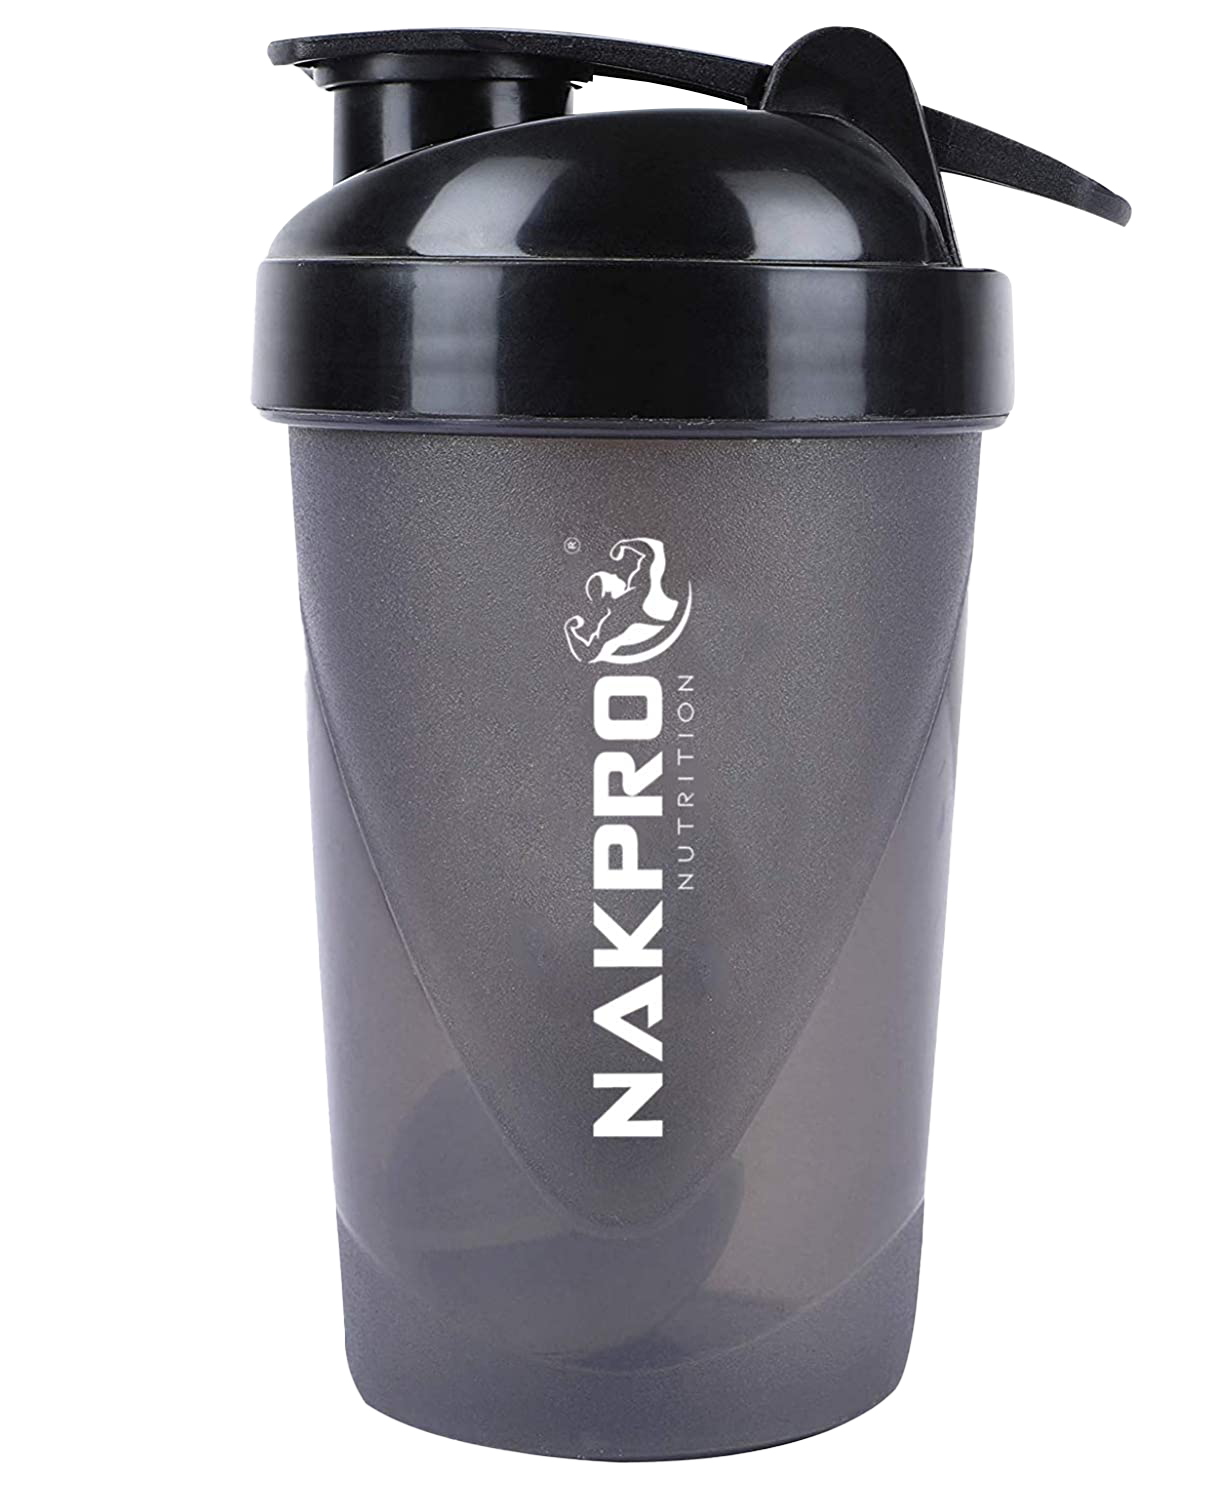 NAKPRO SHAKER bottle for protein shake, Leakproof Guarantee, Food